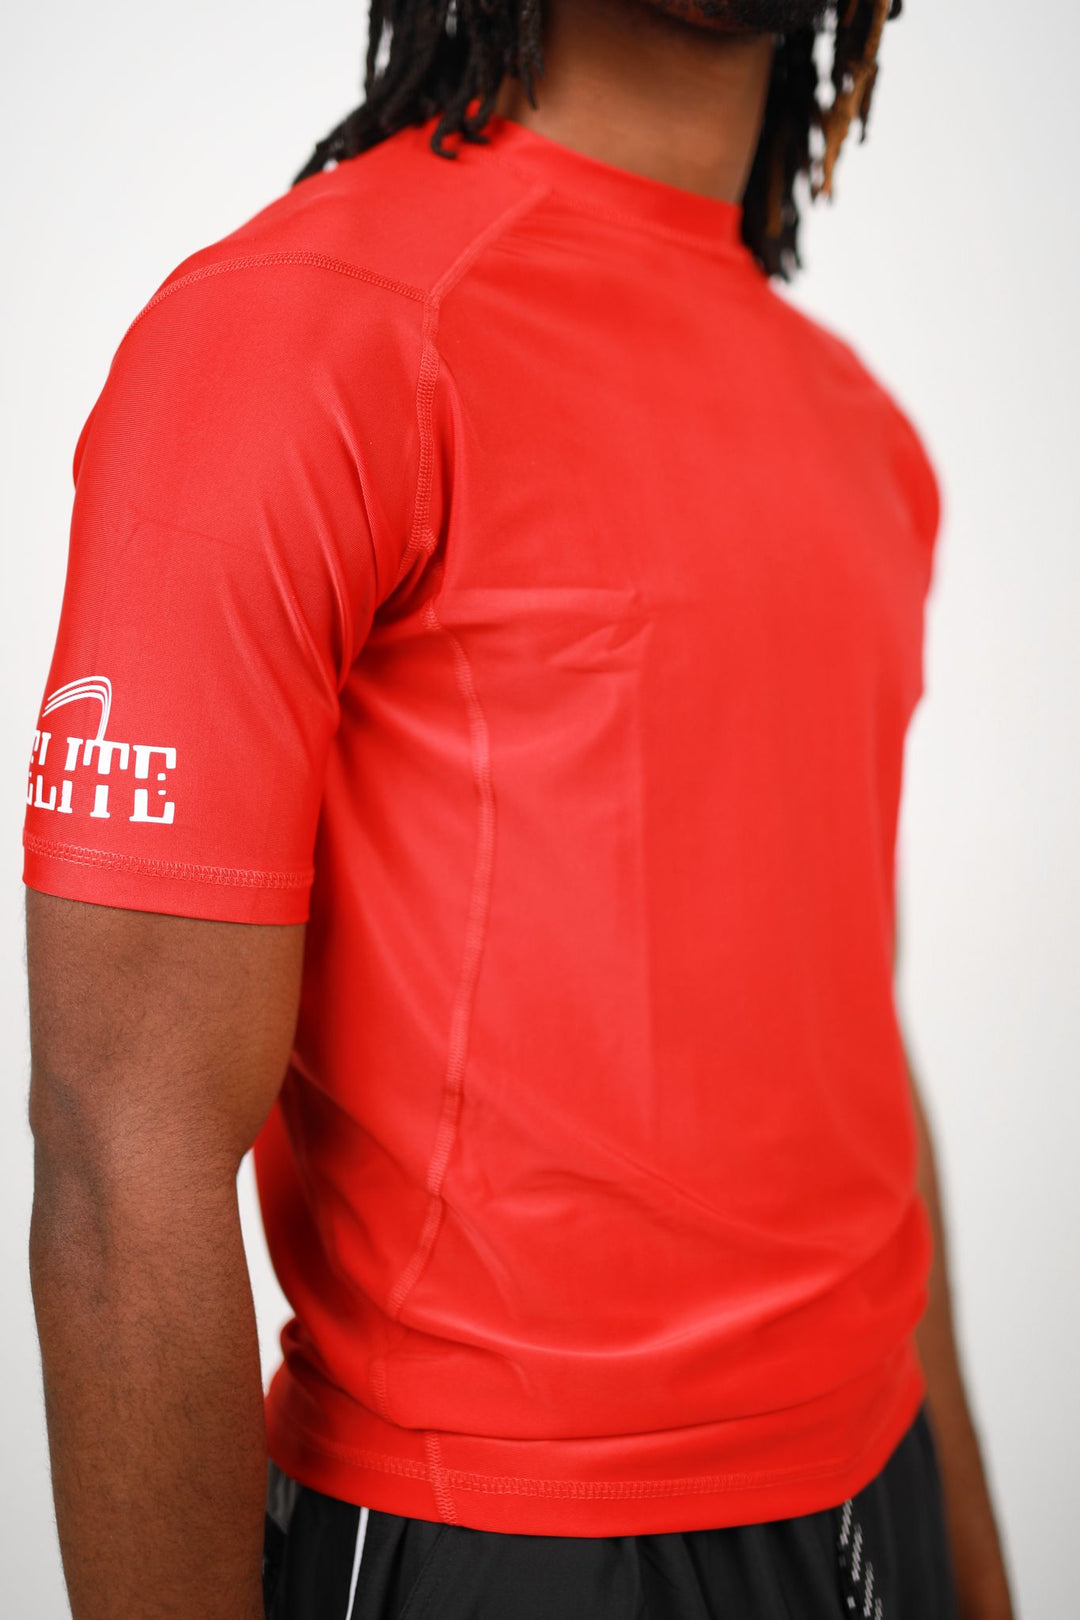 Elite - Compression Shirt Red